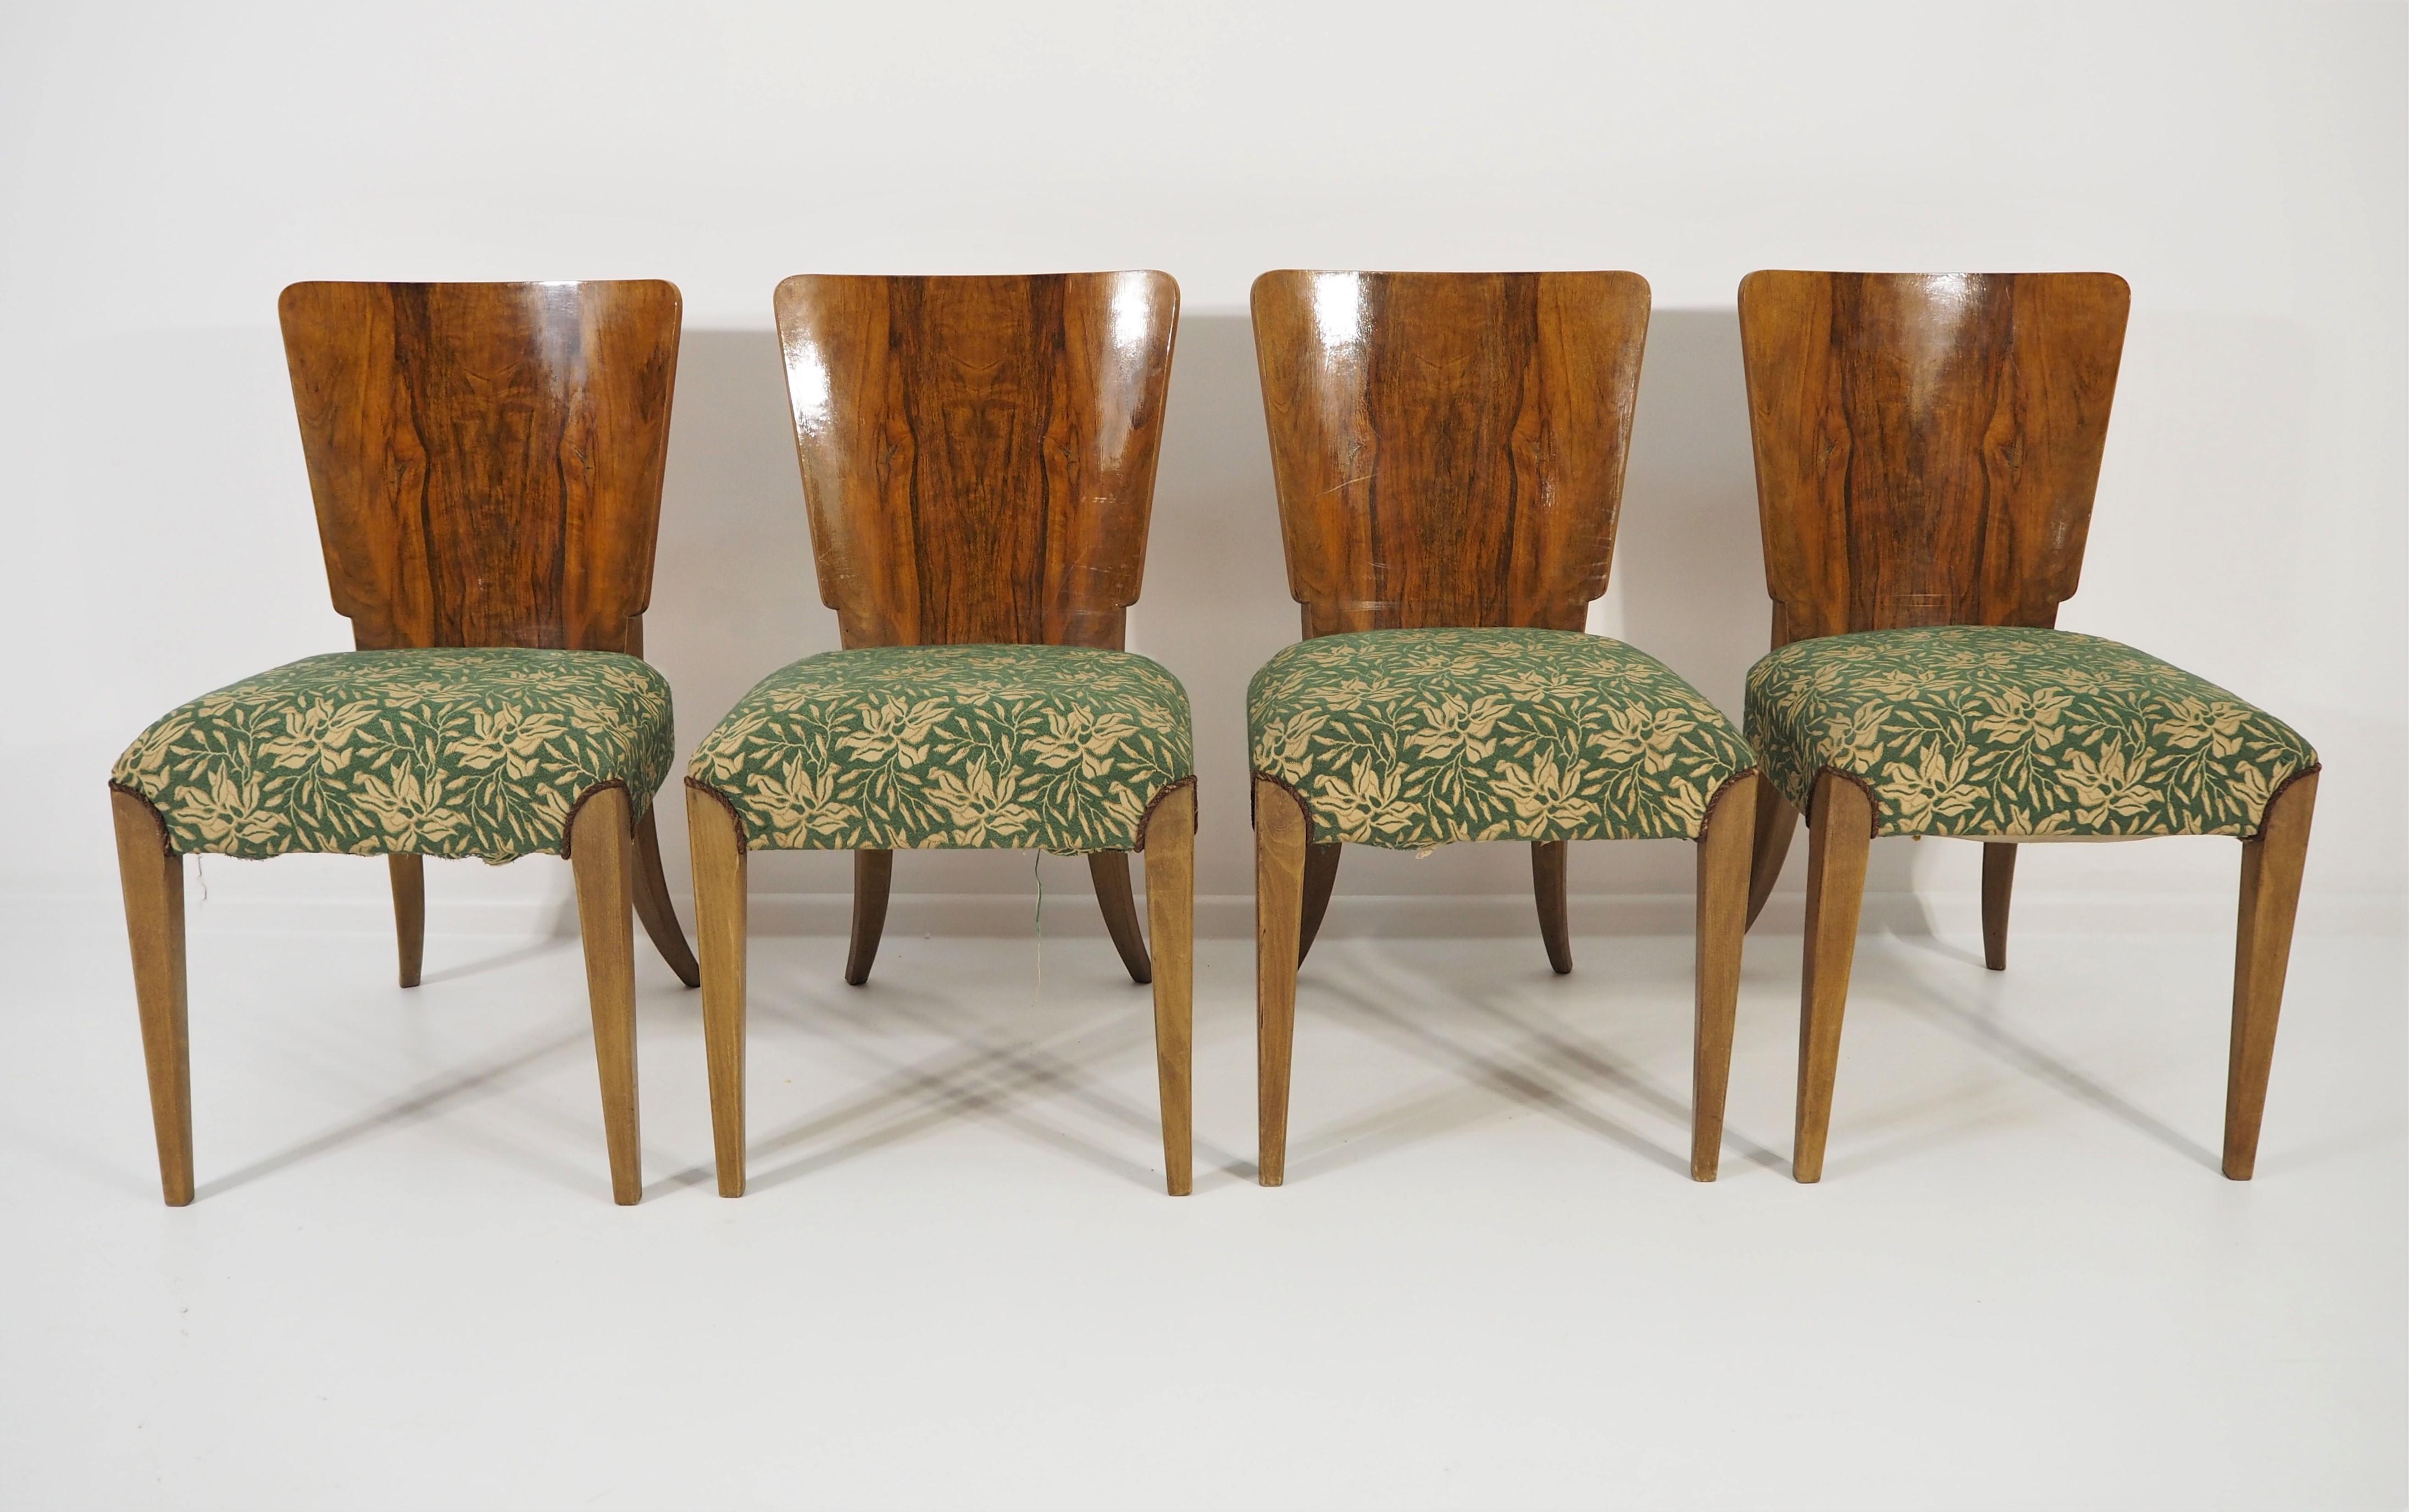 Vintage Art Deco dining chairs by Jindřich Halabala, Set of 4. Original condition, walnut.